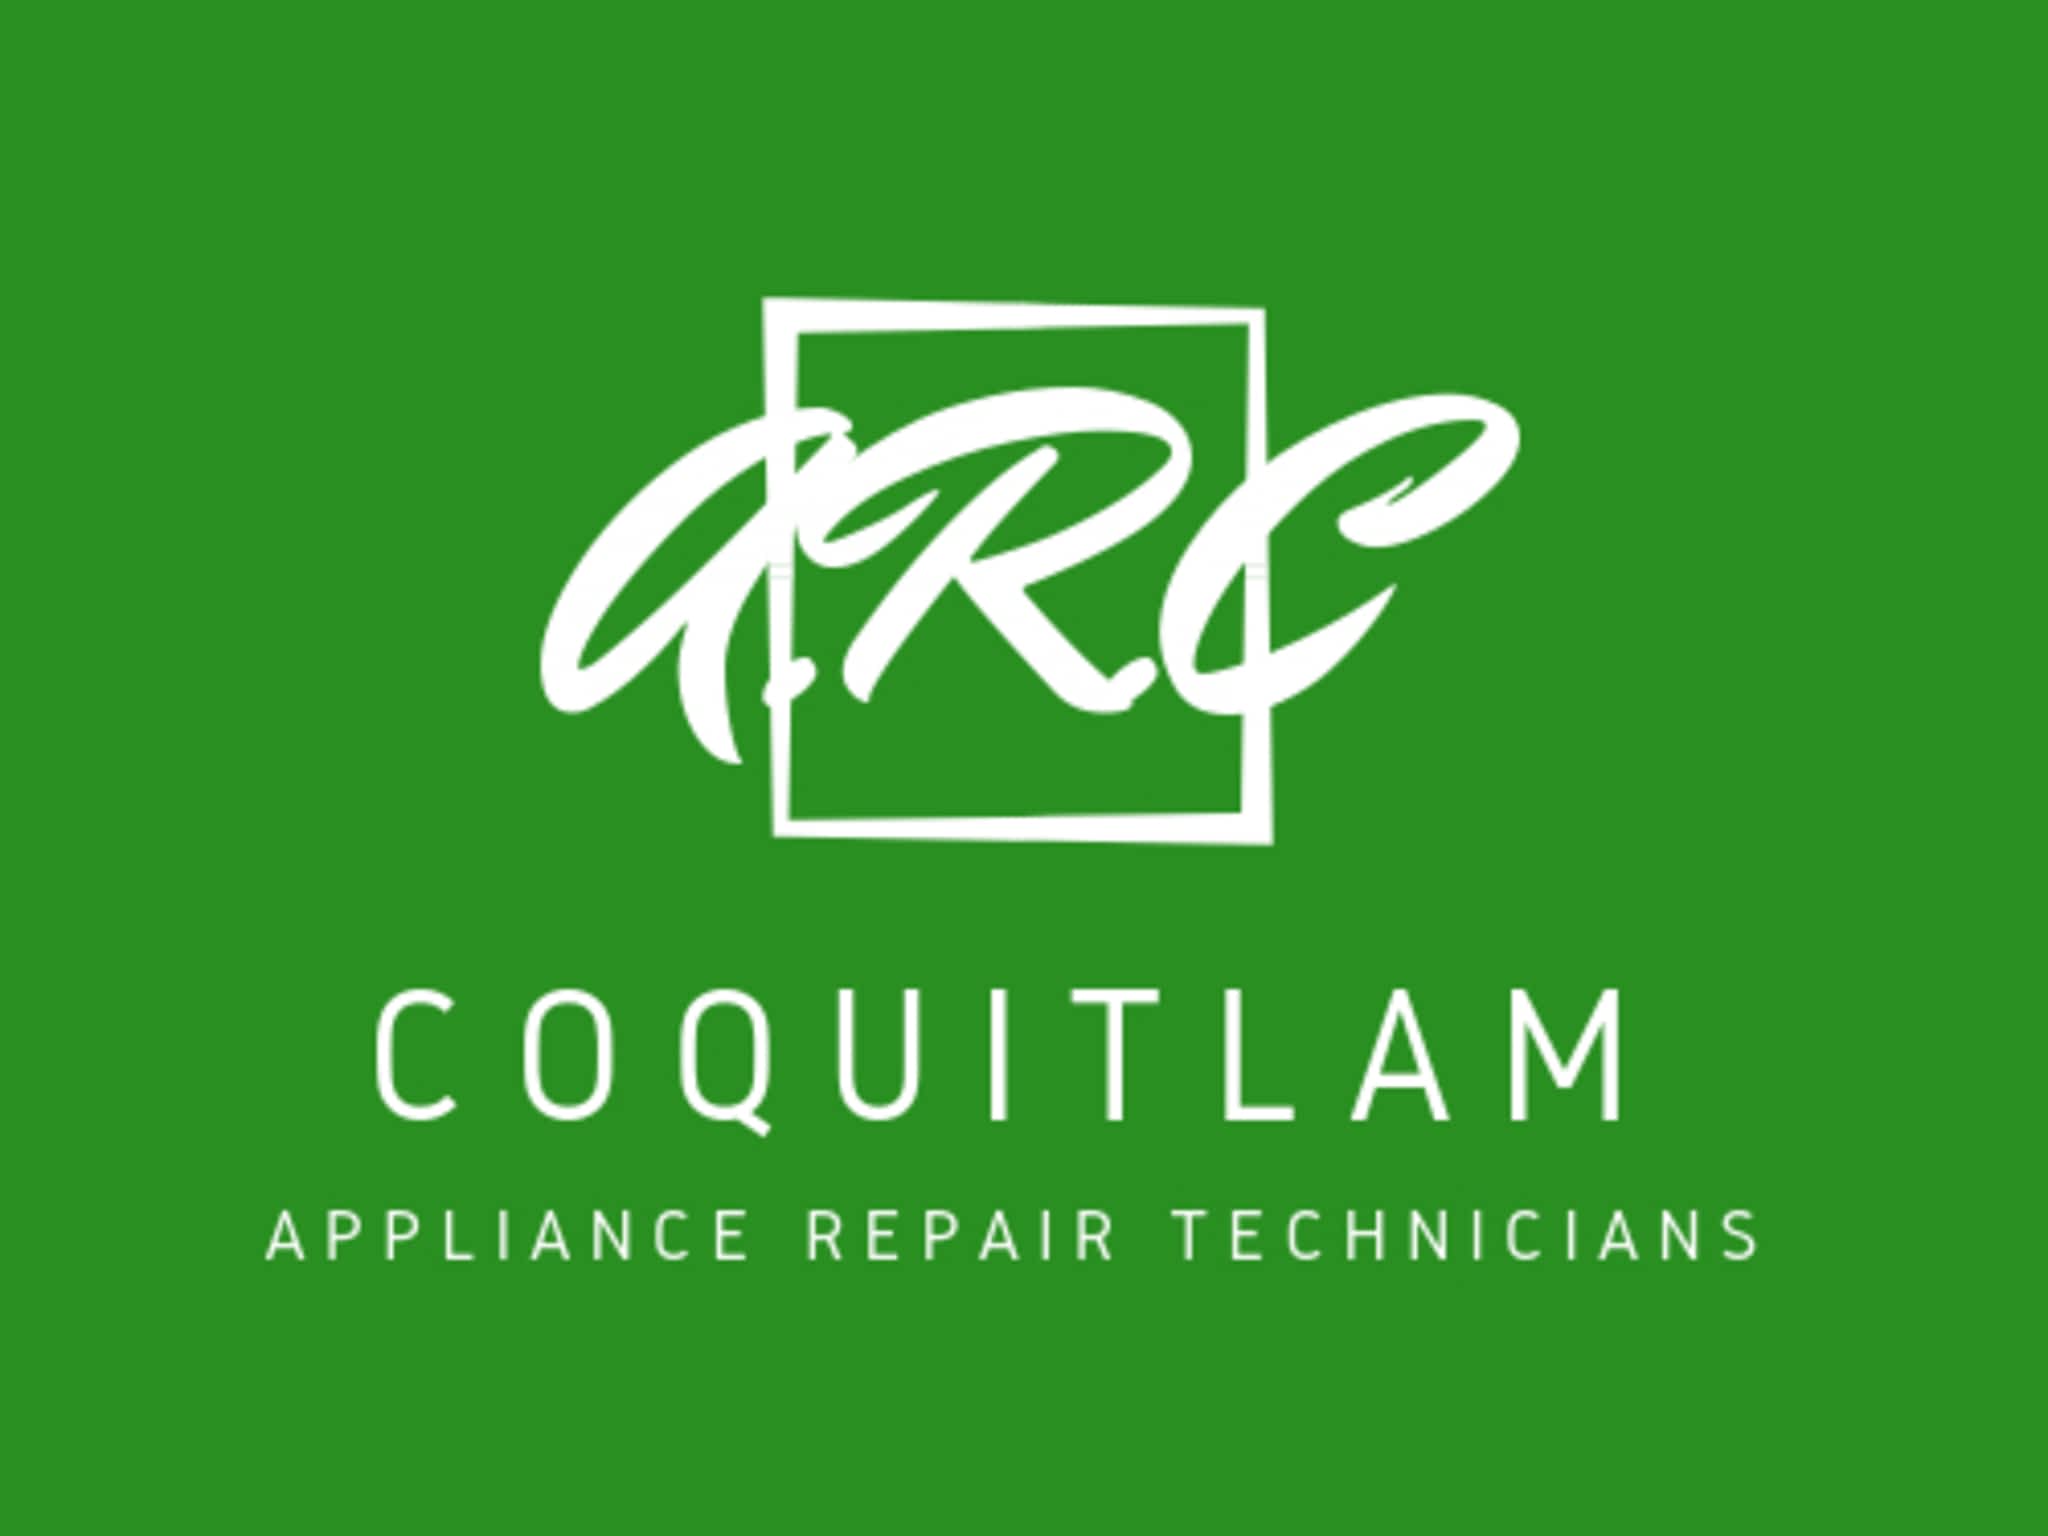 photo Appliance Repair Coquitlam